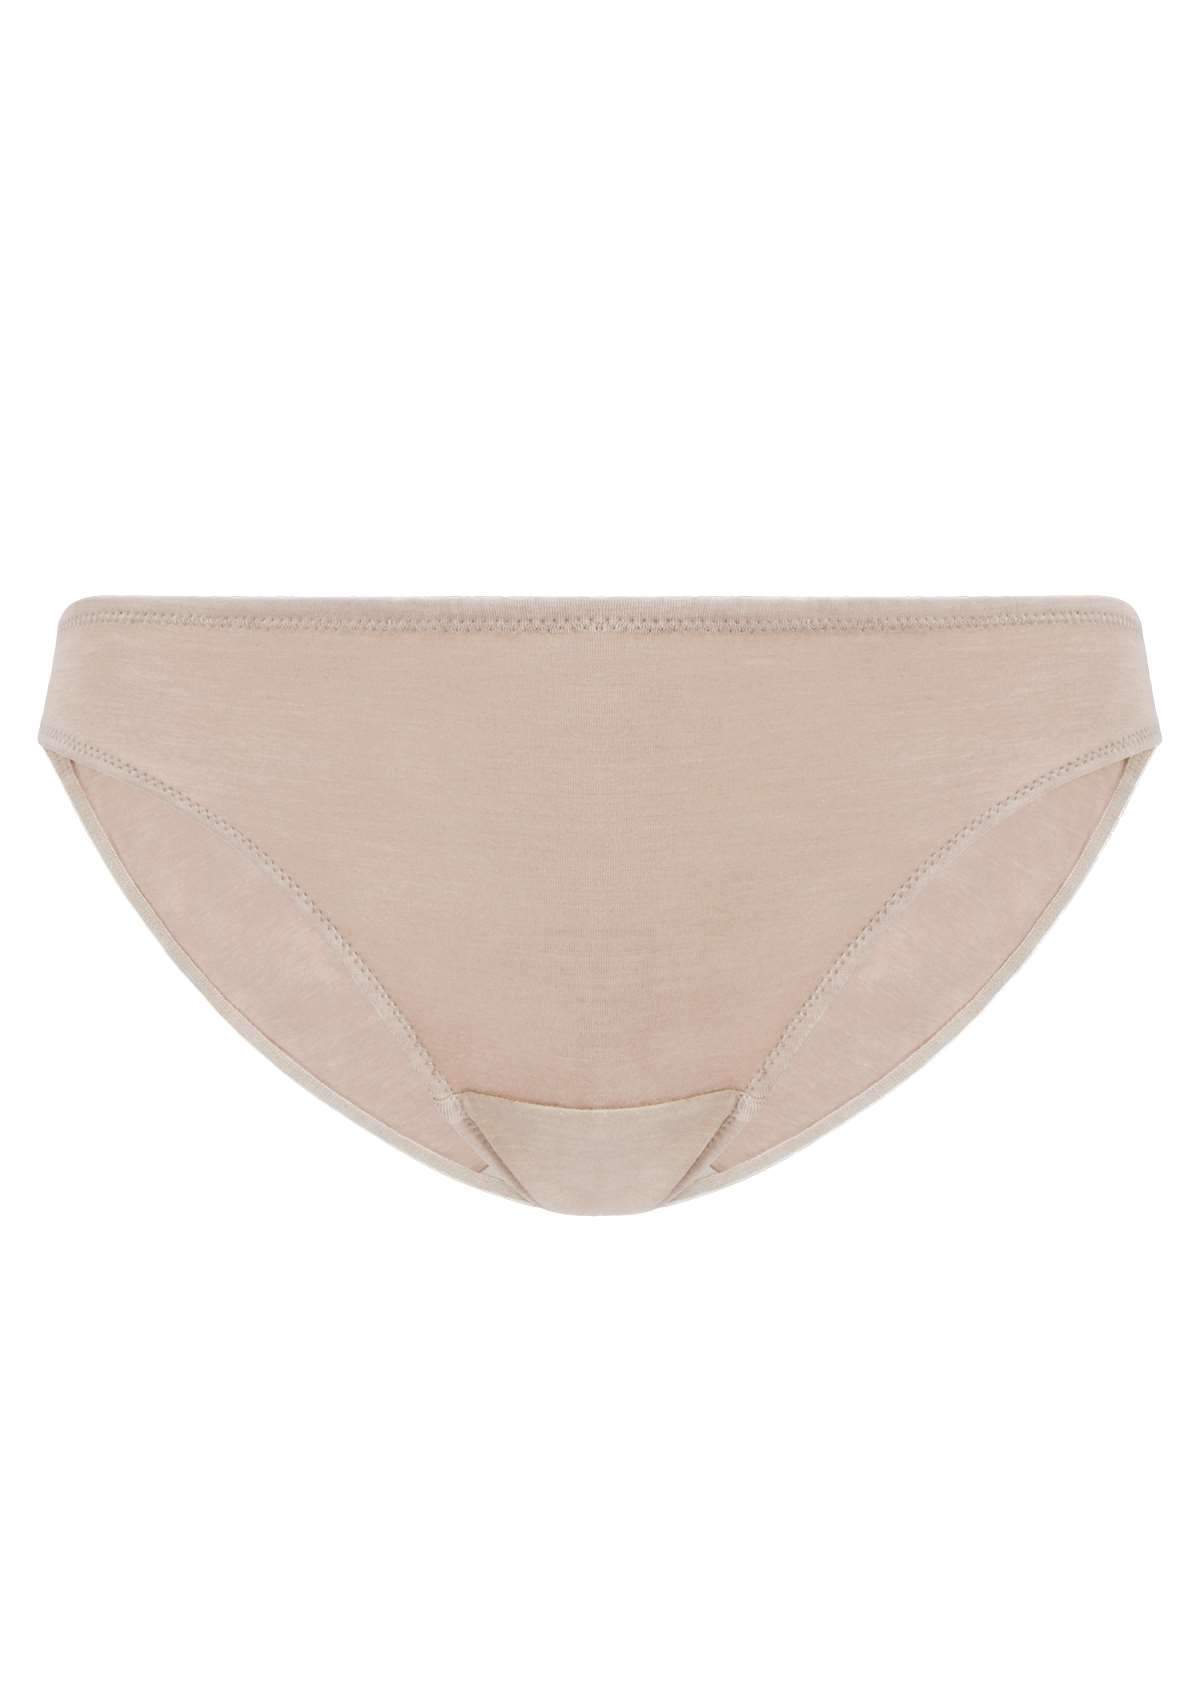 HSIA Comfort Cotton Mid-rise Bikini Panties 3 Pack - L / Black+Pink+Beige